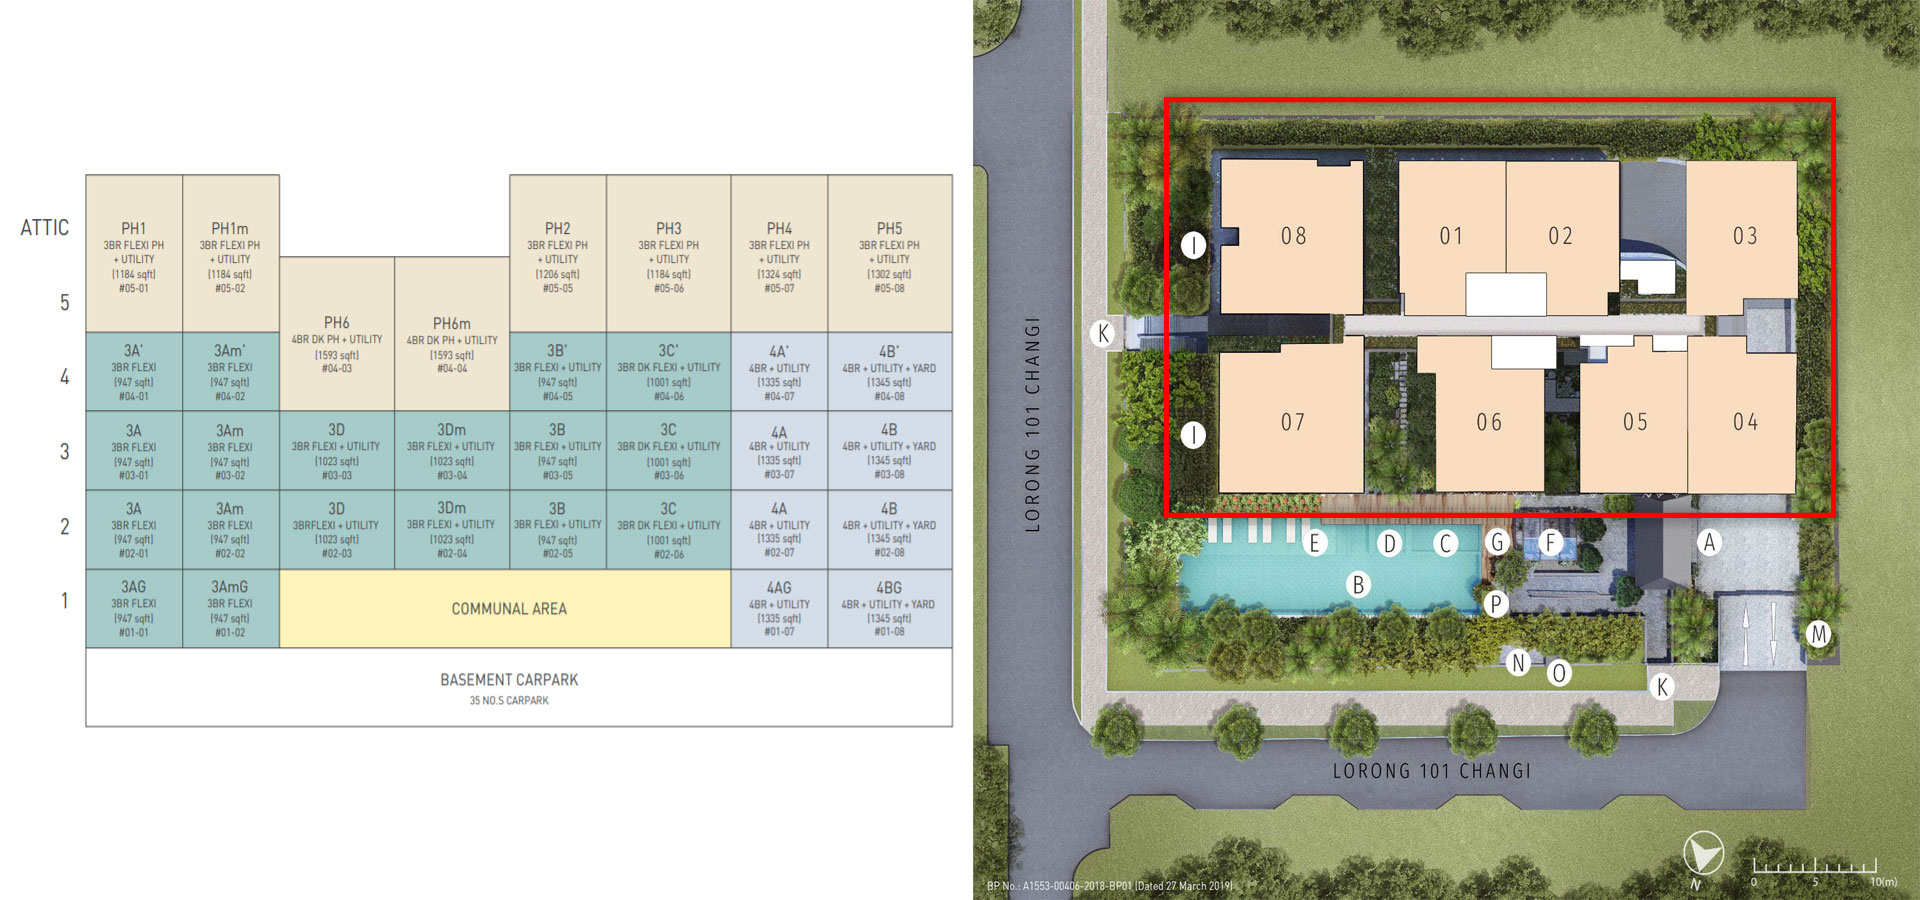 Olloi Condo Schematic Diagram and Typical Floor Plan (Comparison)